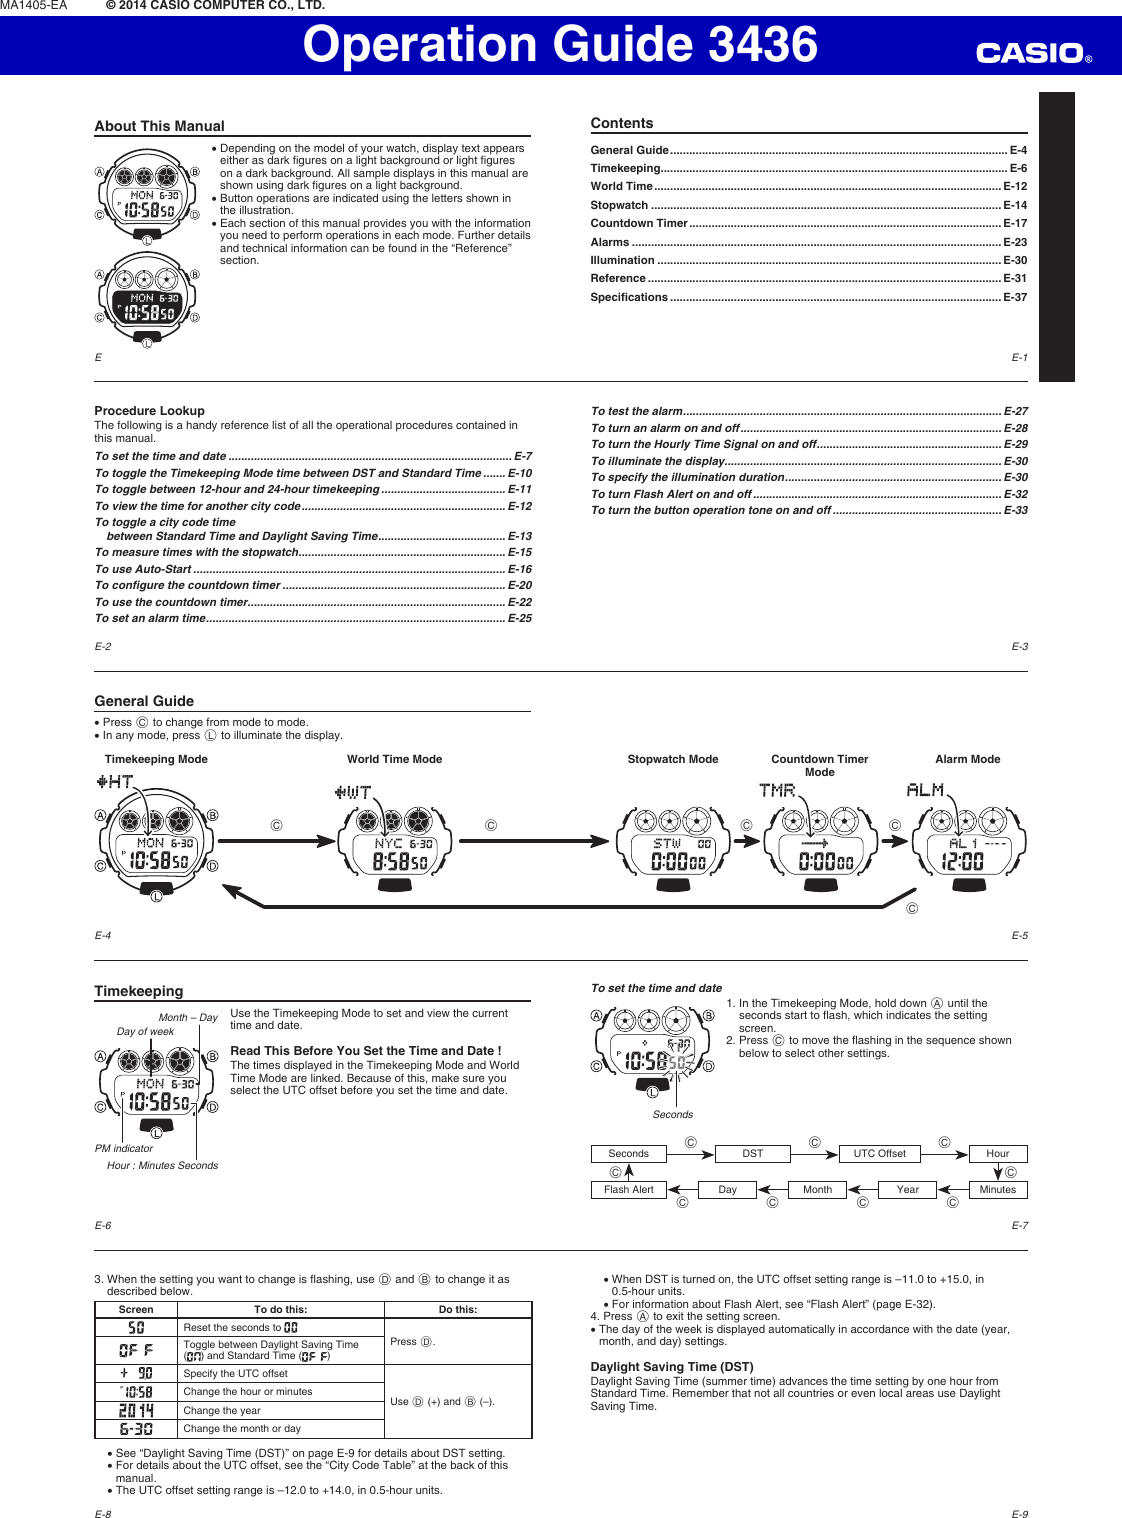 Page 1 of 5 - Casio MA1405-EA QW-3436 User Manual  To The Bd1bb088-964e-46fb-afb3-ad01ccfcbfc5